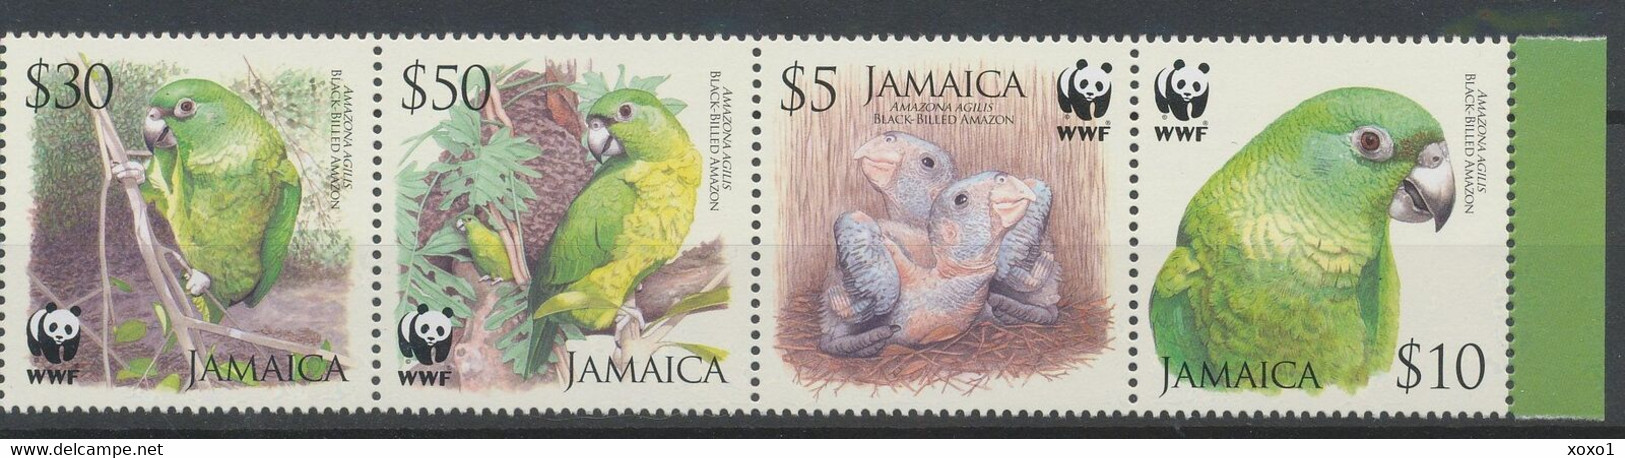 Jamaica 2006 MiNr. 1122 - 1125 Jamaika Birds, Parrots, Black-billed Amazon 4v MNH** 3.20 € - Jamaica (1962-...)